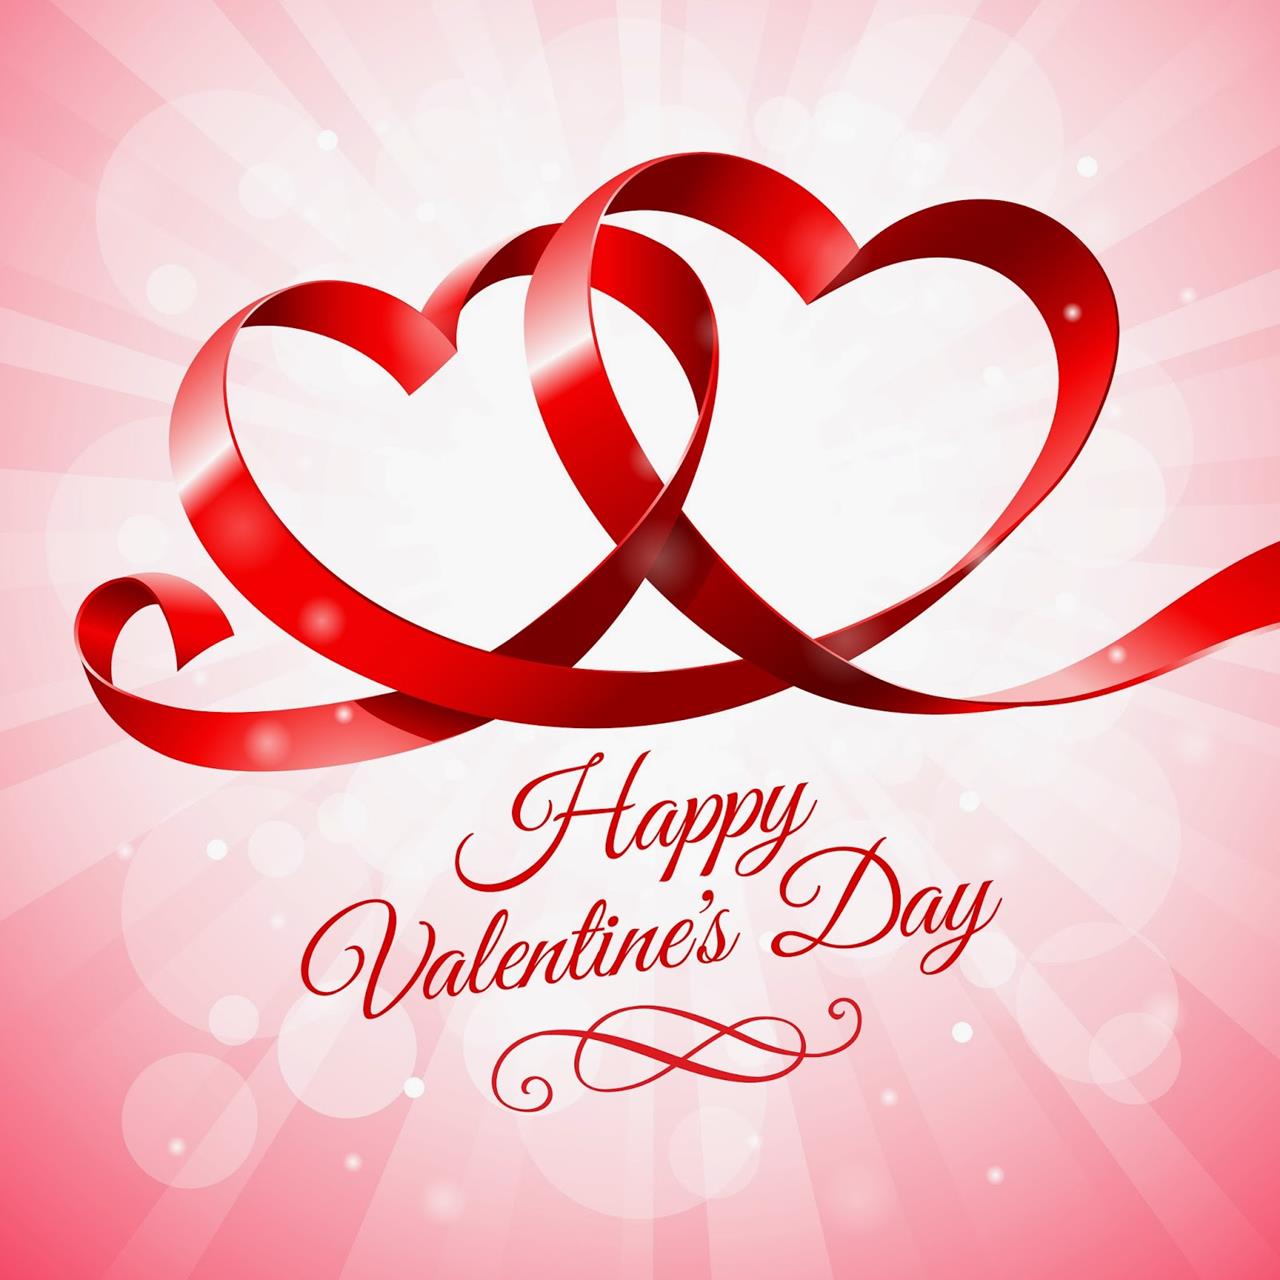 14 feb valentine day wallpaper,heart,text,love,red,valentine's day